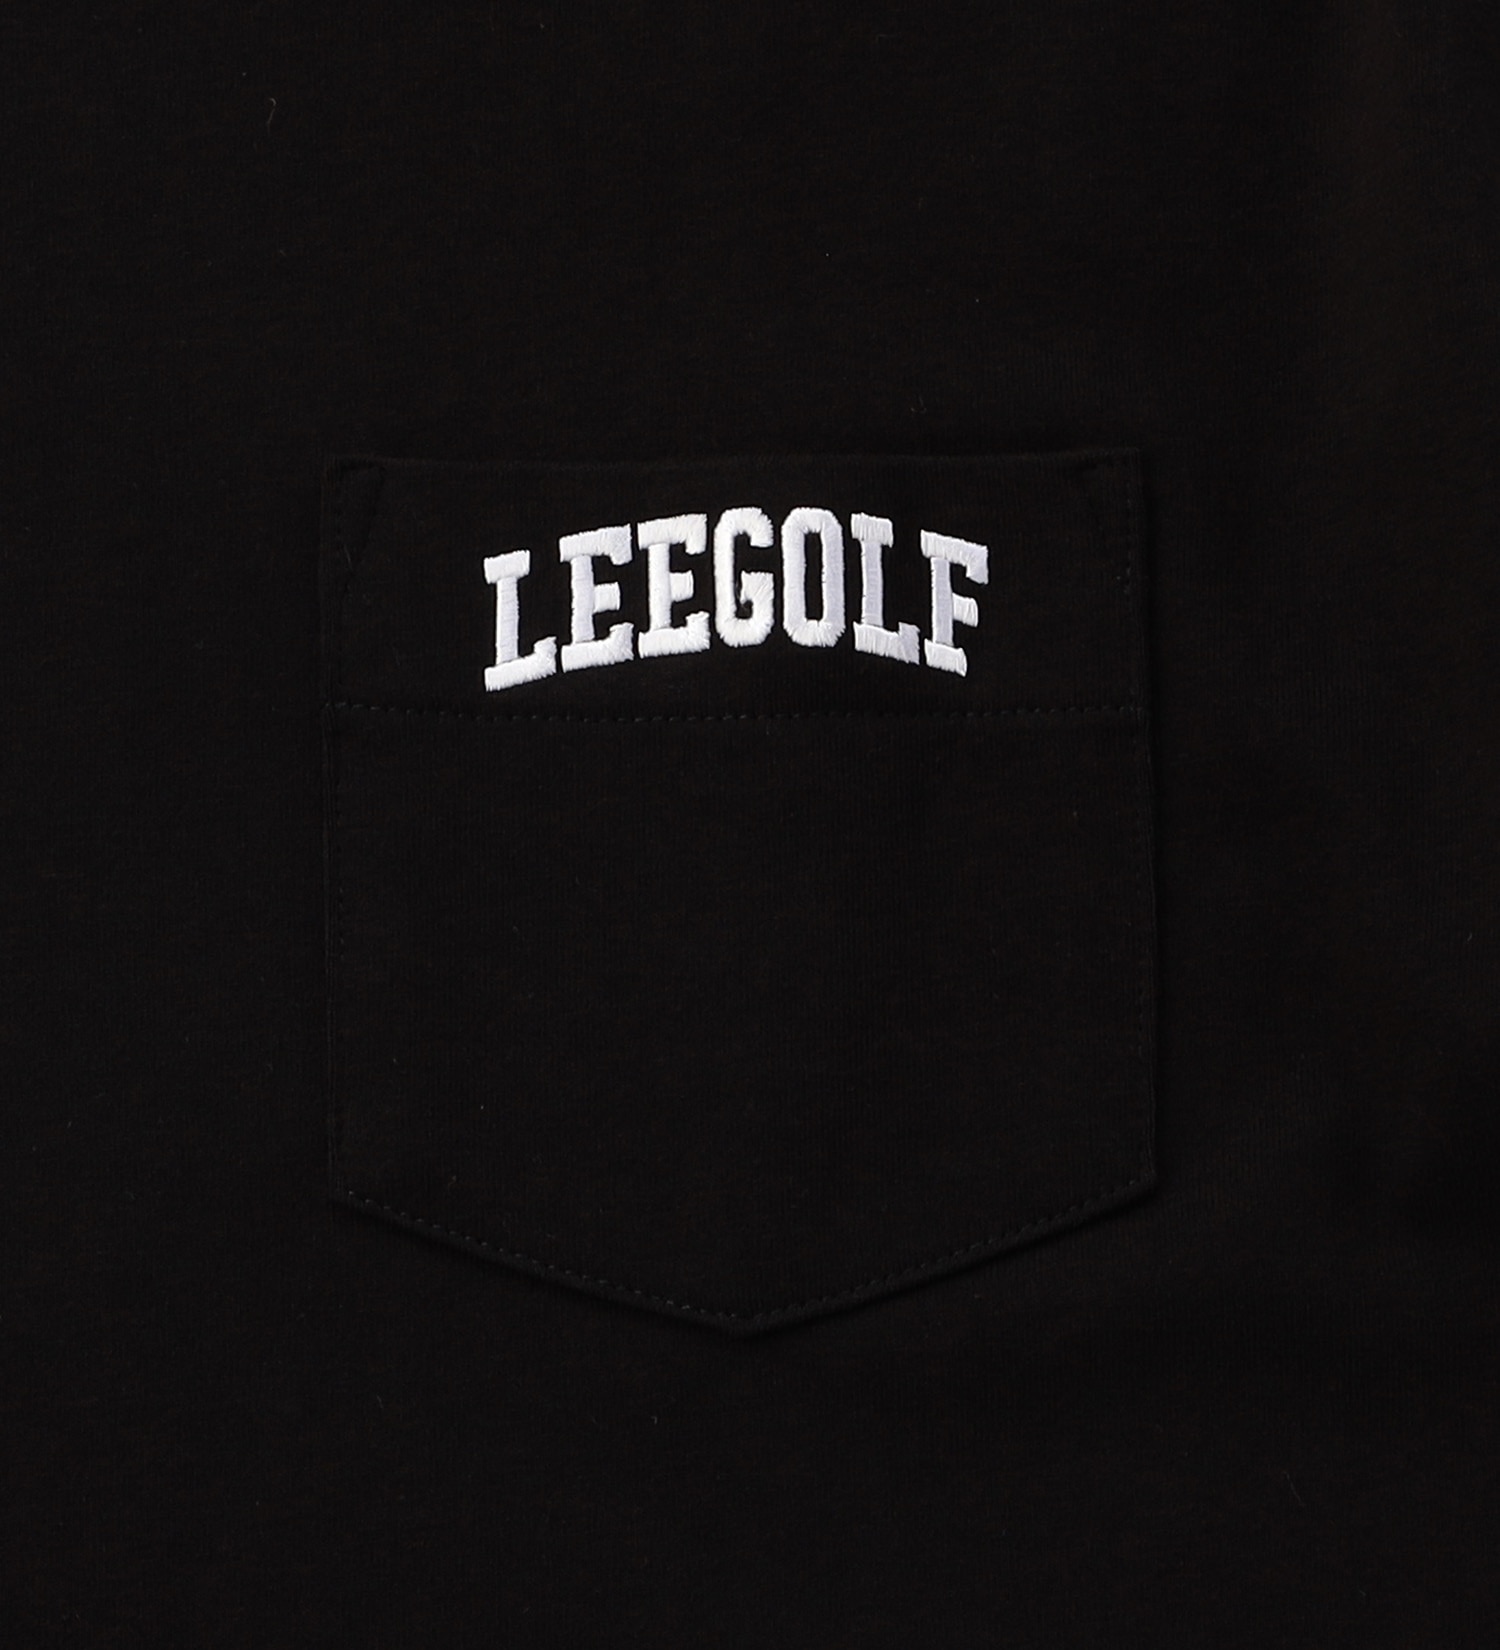 Lee(リー)の【GW SALE】【Lee GOLF】バックプリント半袖Tシャツ|トップス/Tシャツ/カットソー/メンズ|ブラック